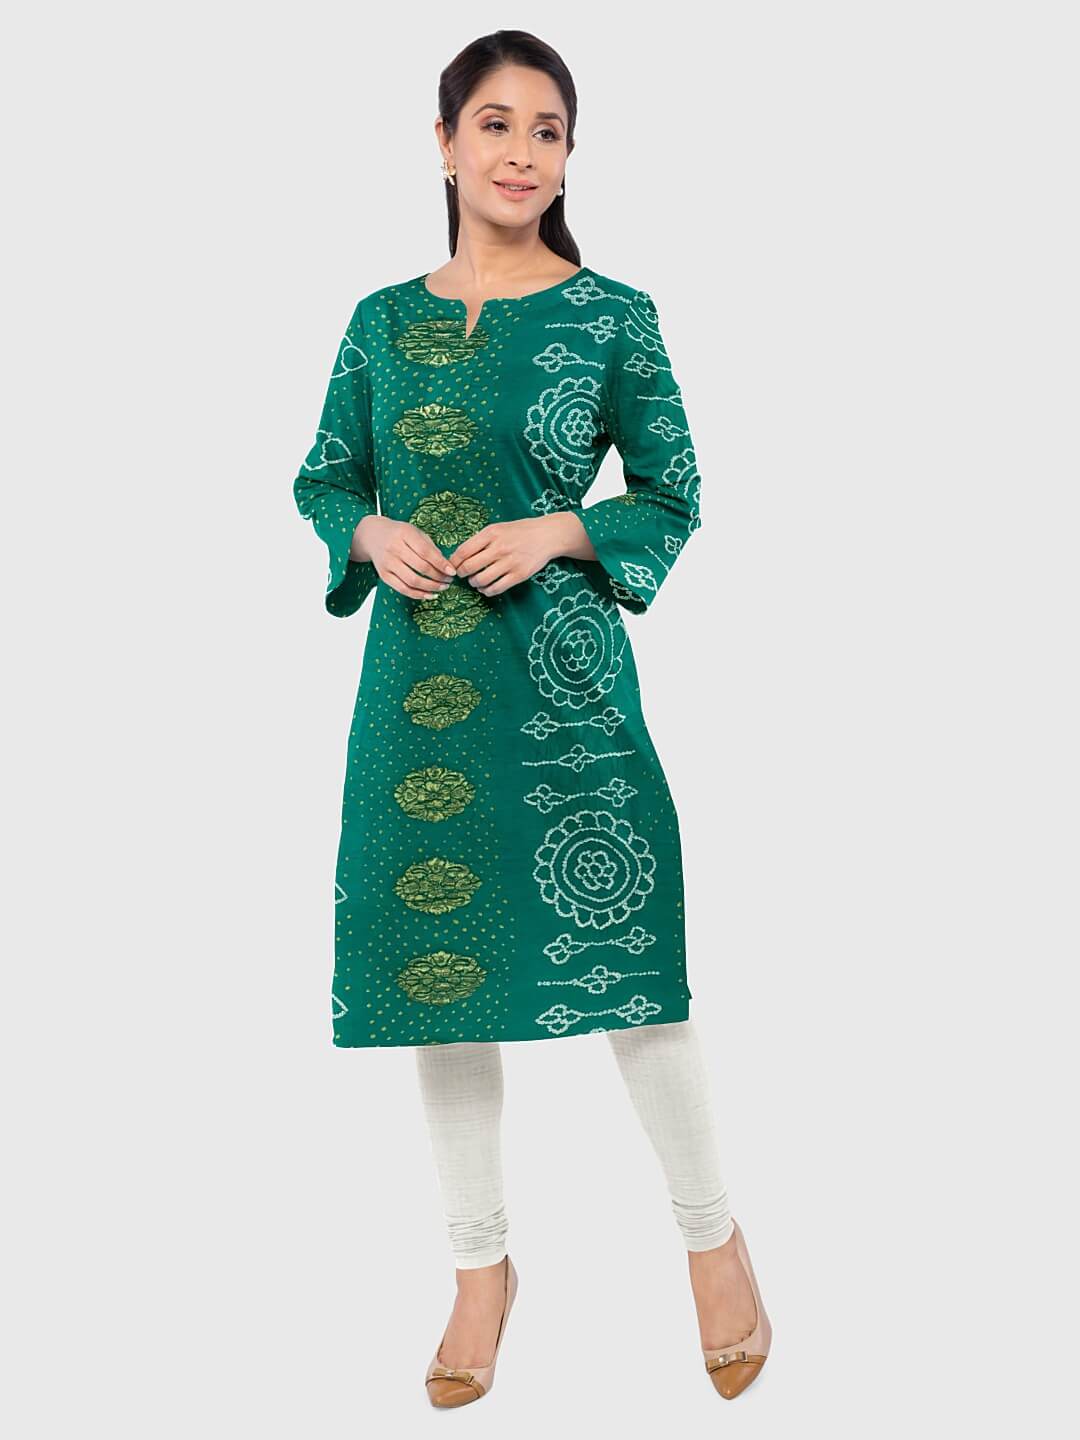 Buy Online Designer Multi Color Banarasi Kurti For Girls And Women